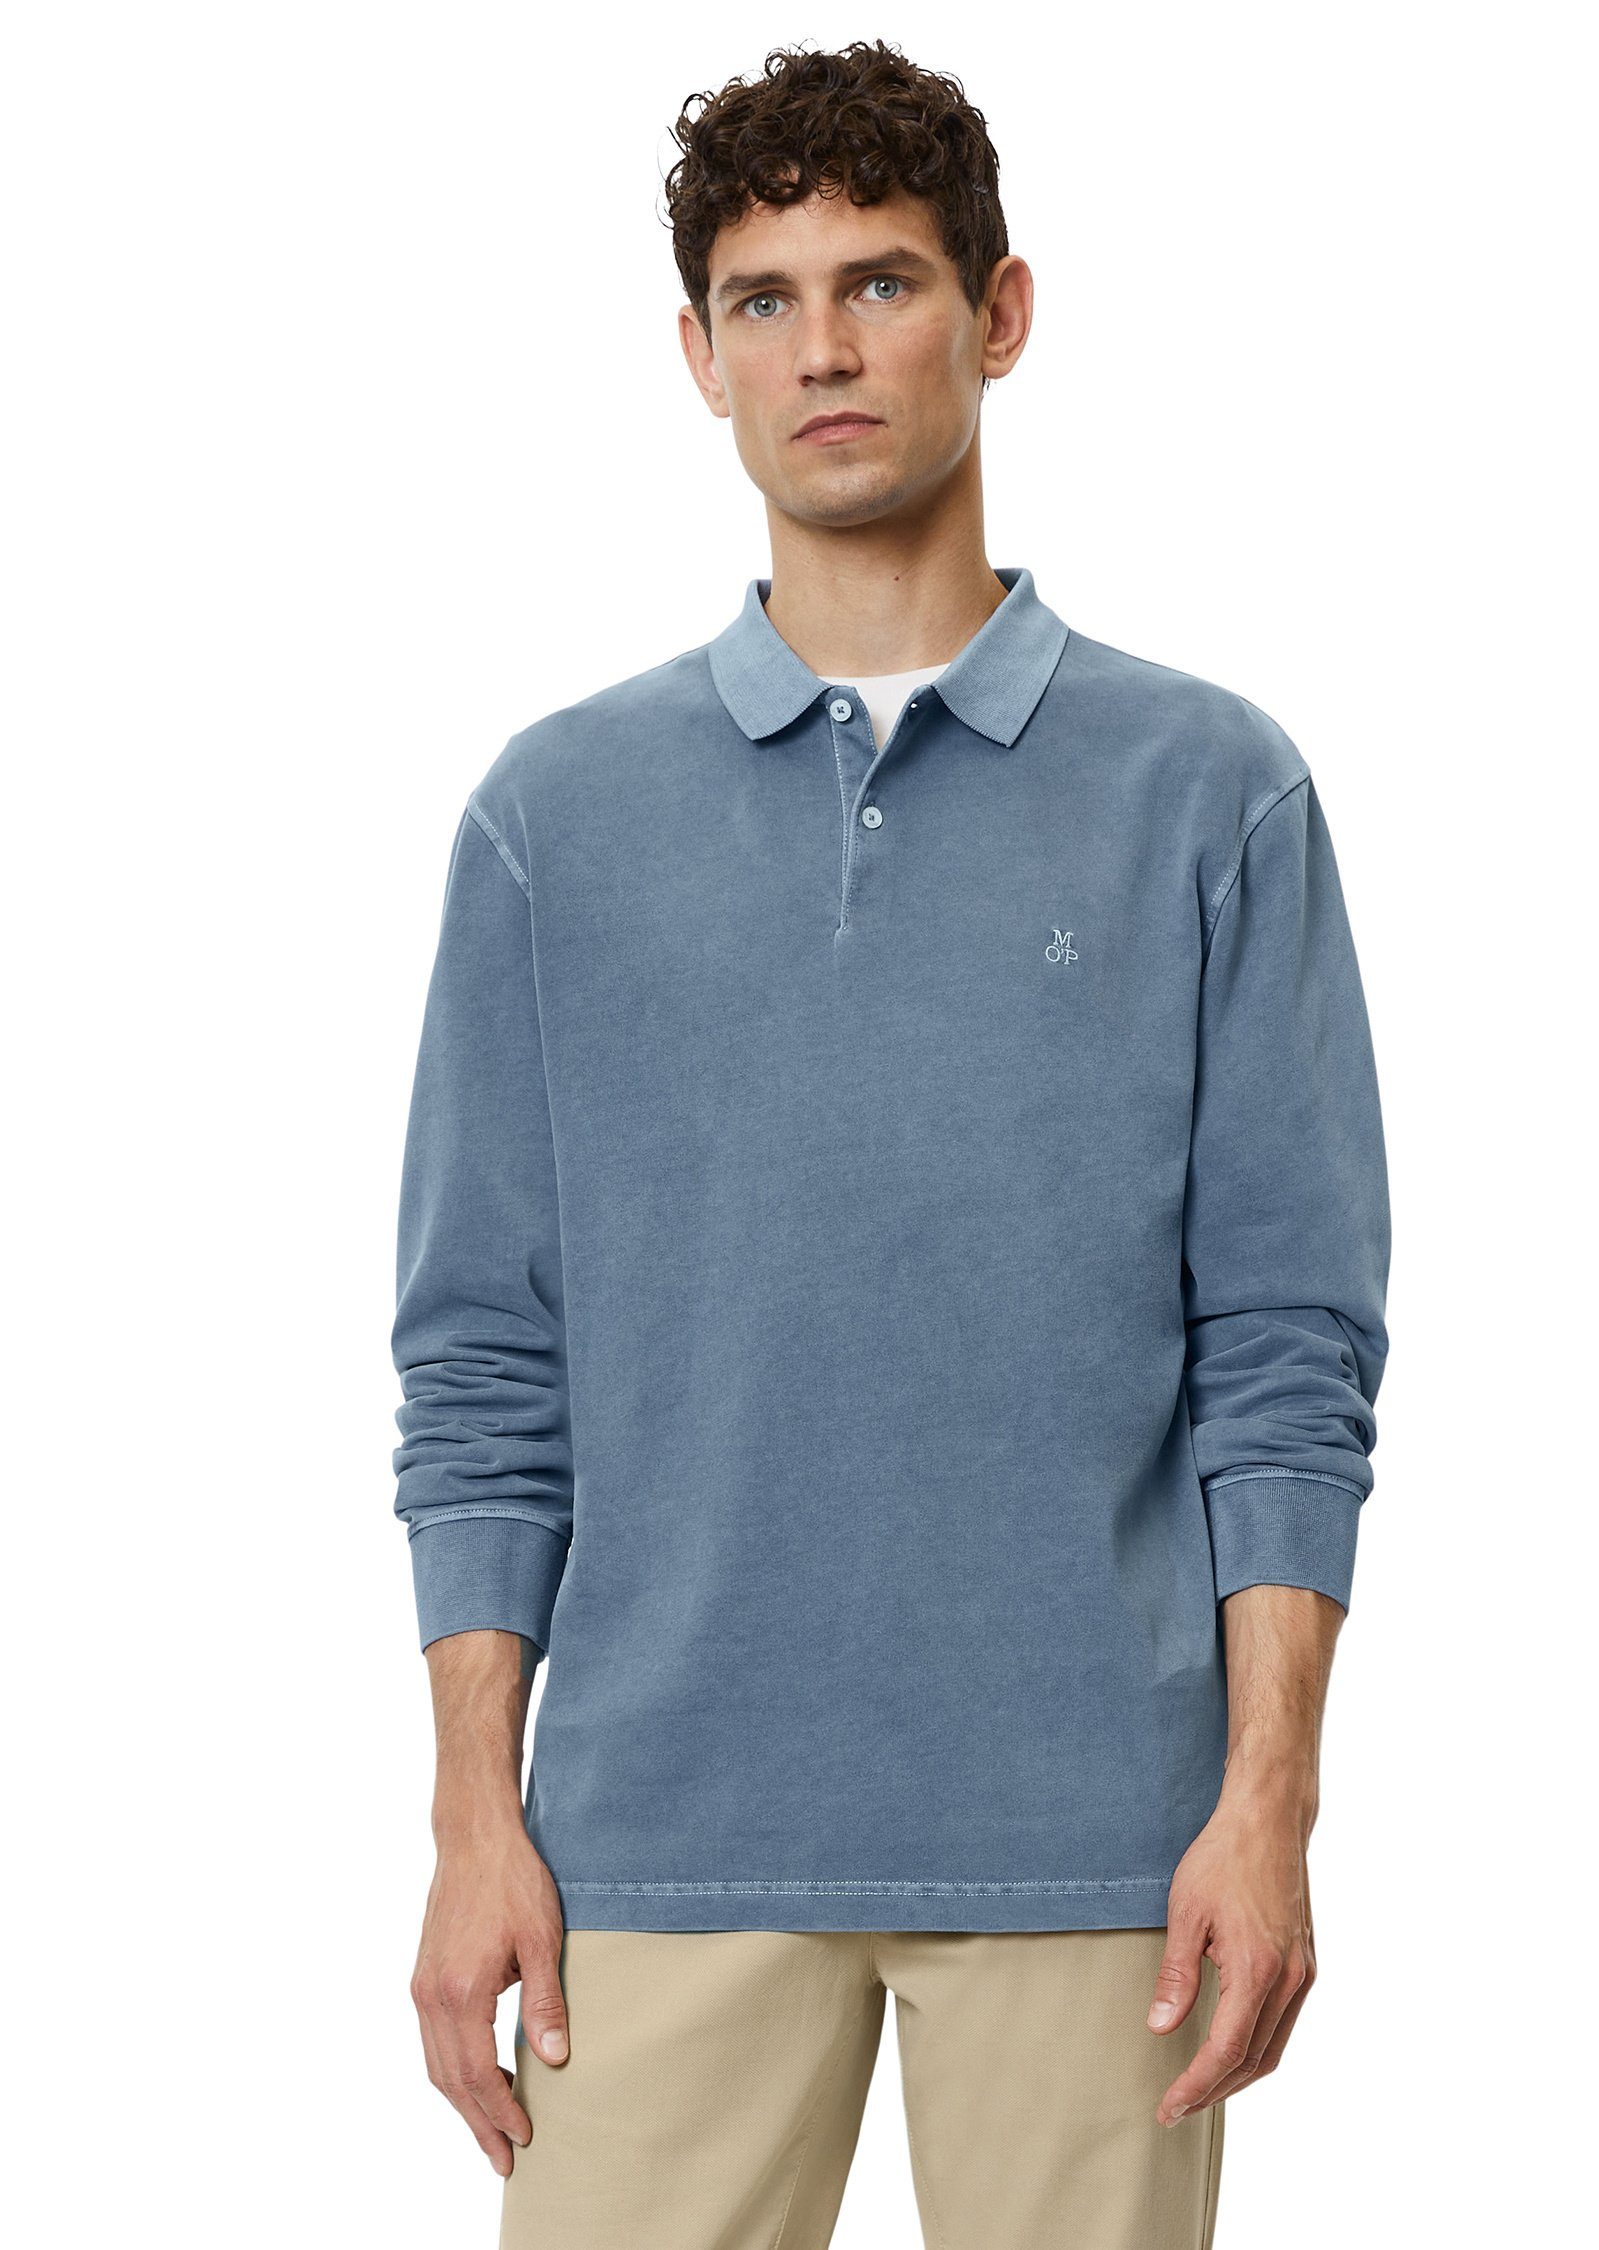 Marc O'Polo Langarm-Poloshirt in schwerer Soft-Touch-Jersey-Qualität blau